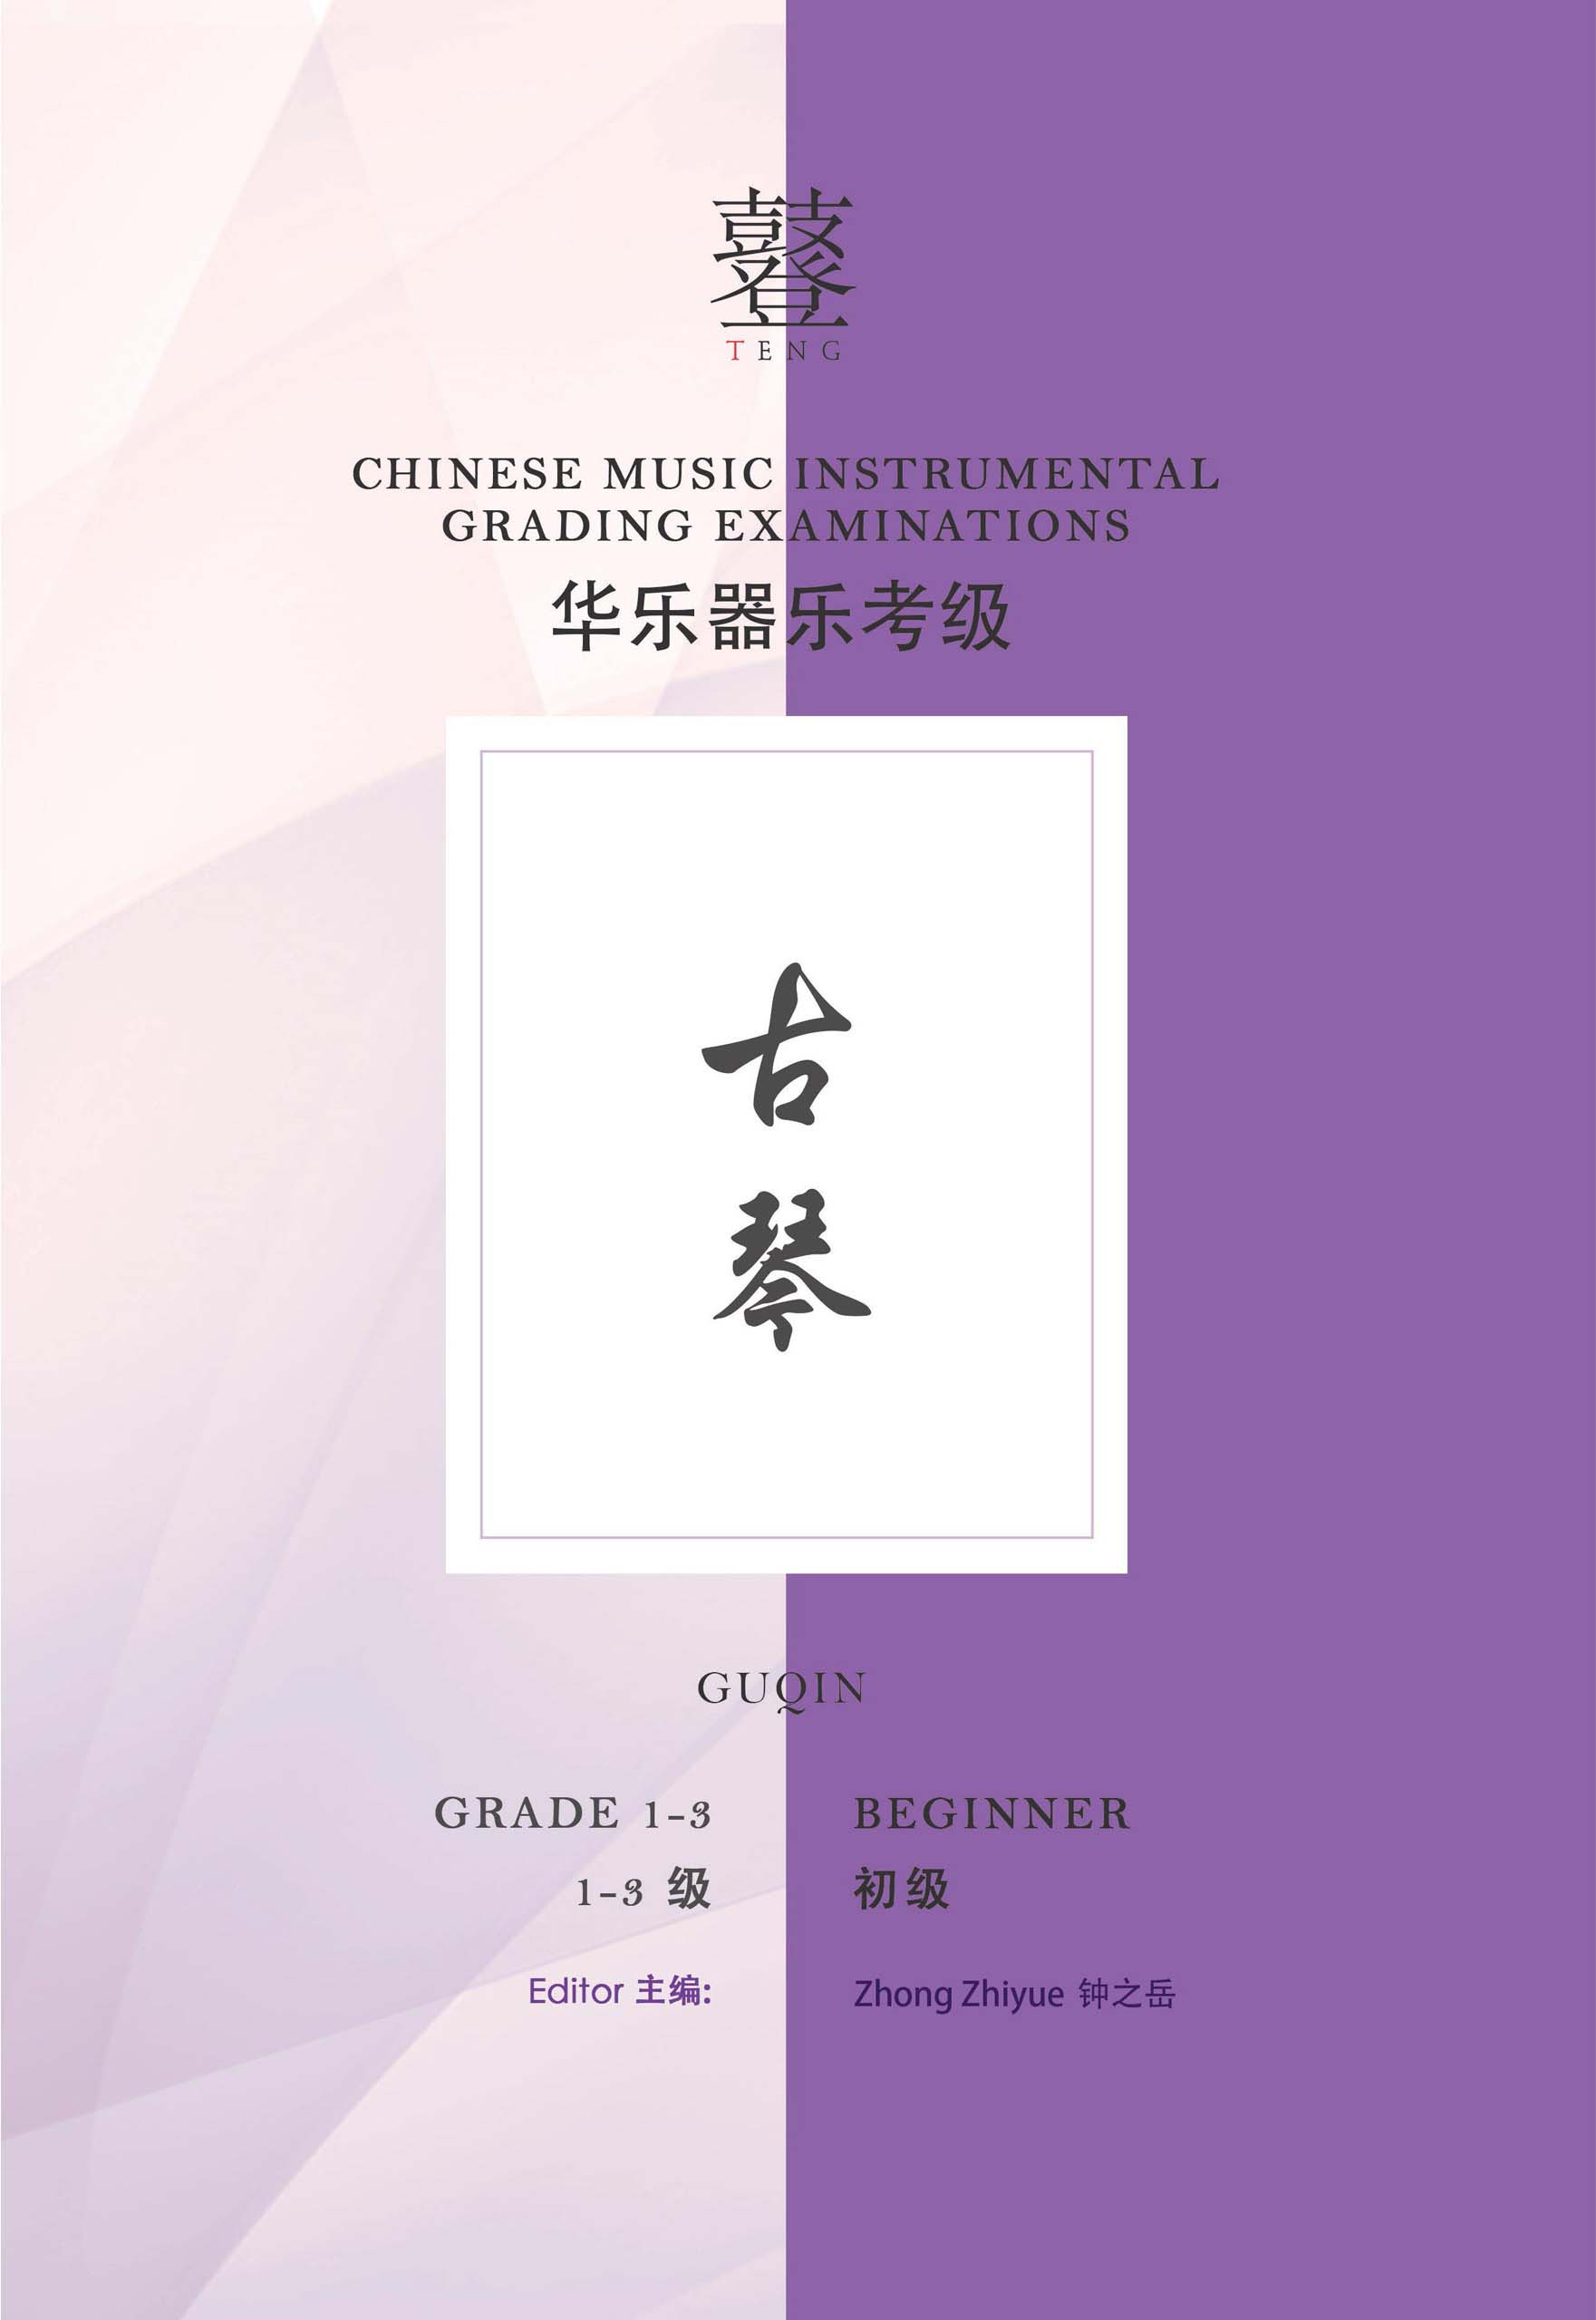 Guqin Grading Examination Book by Teng Beginner Grade 1-3 featured photo